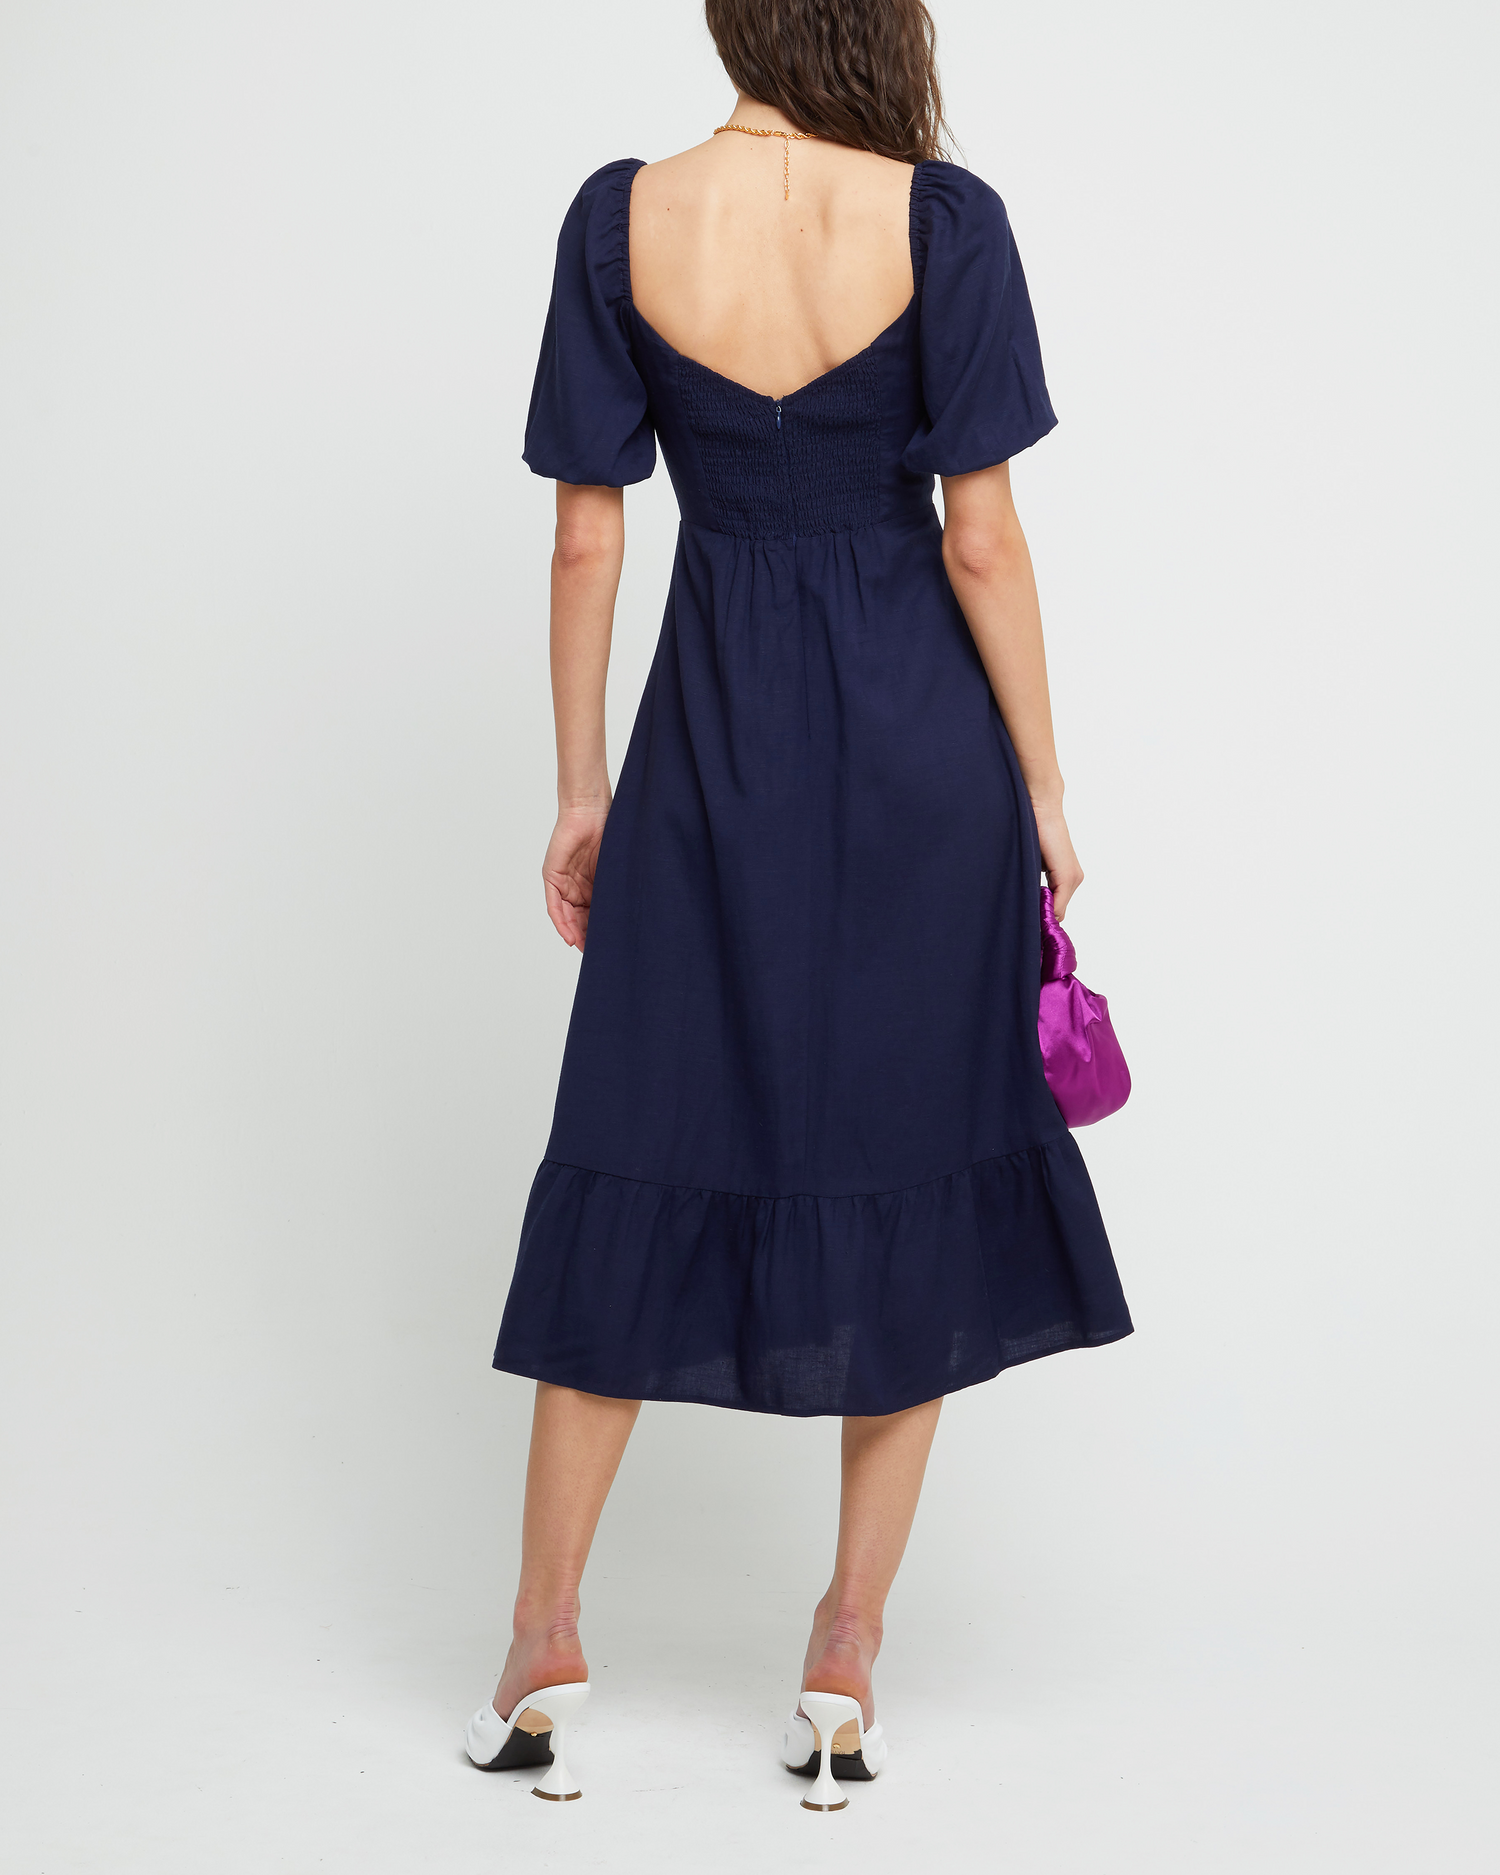 Second image of Violetta Midi Dress, a blue midi dress, sweetheart neckline, short sleeves, puff sleeves, side slit